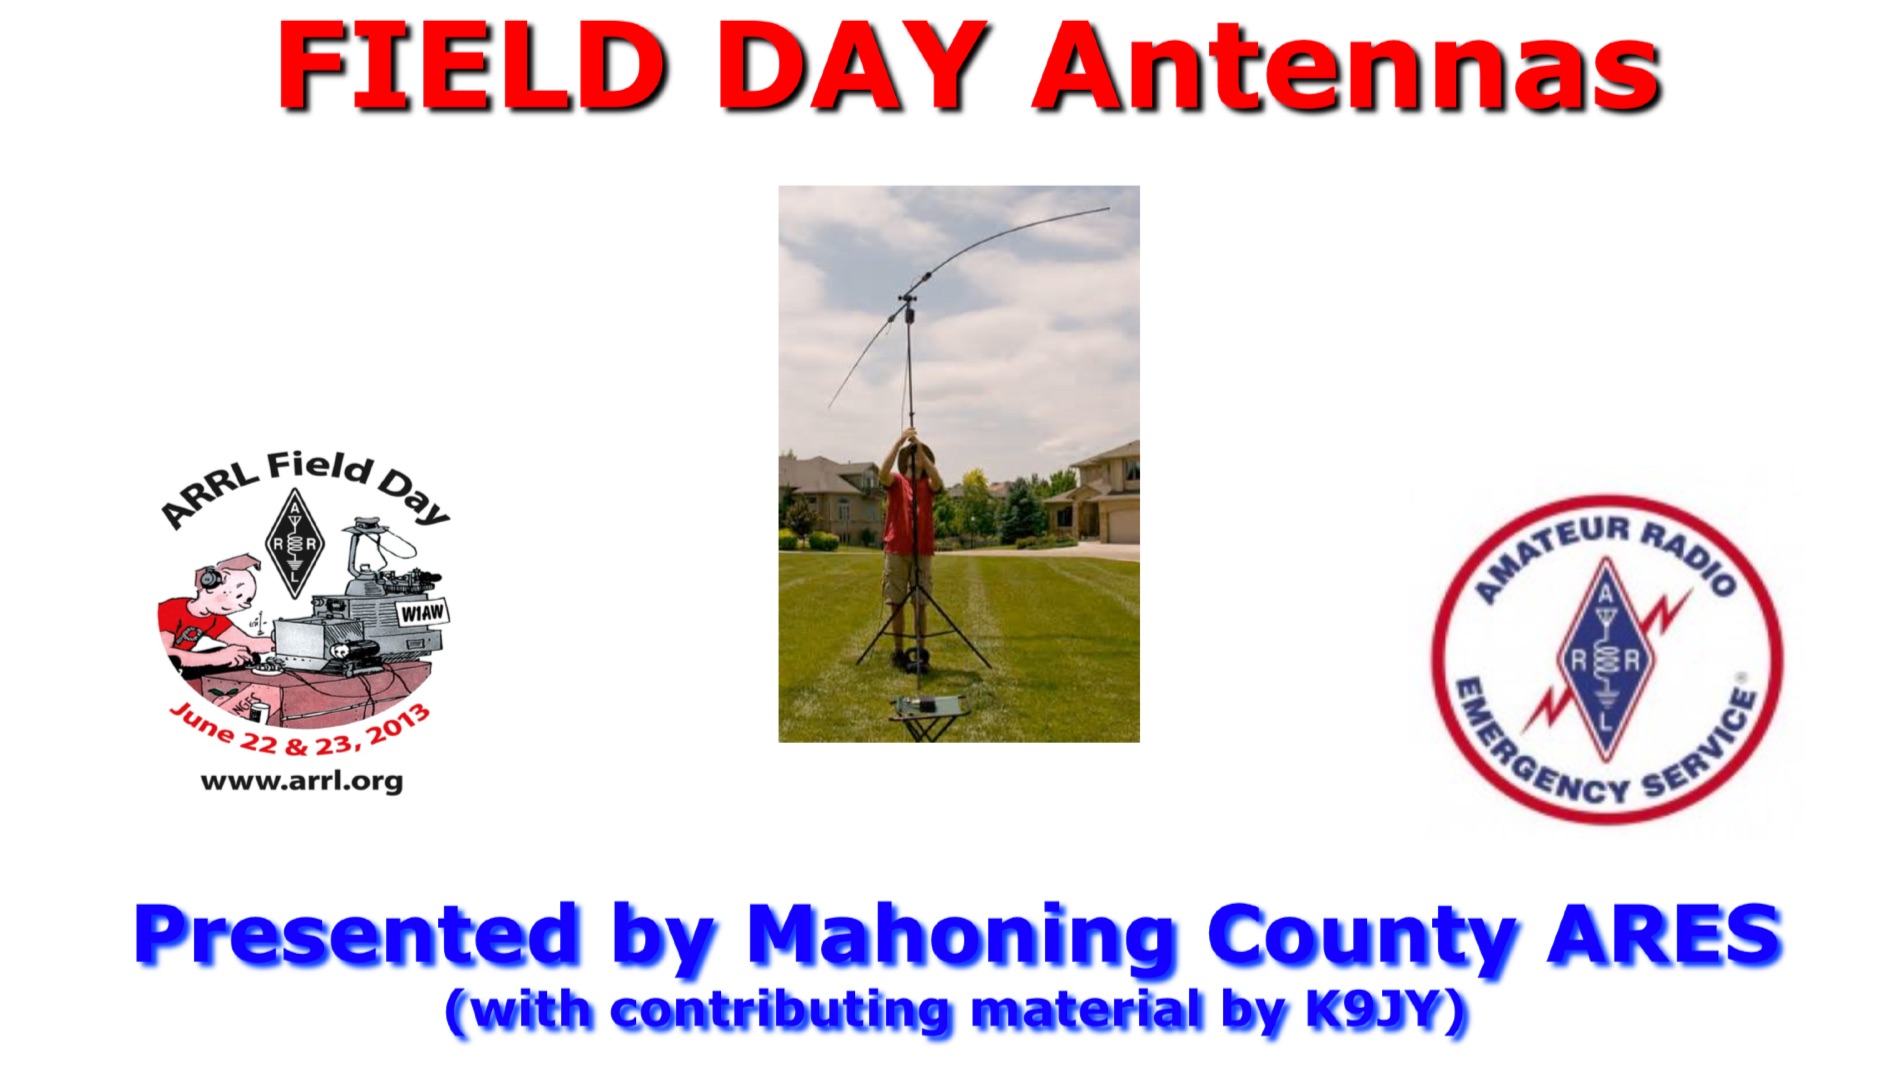 Field Day Antennas